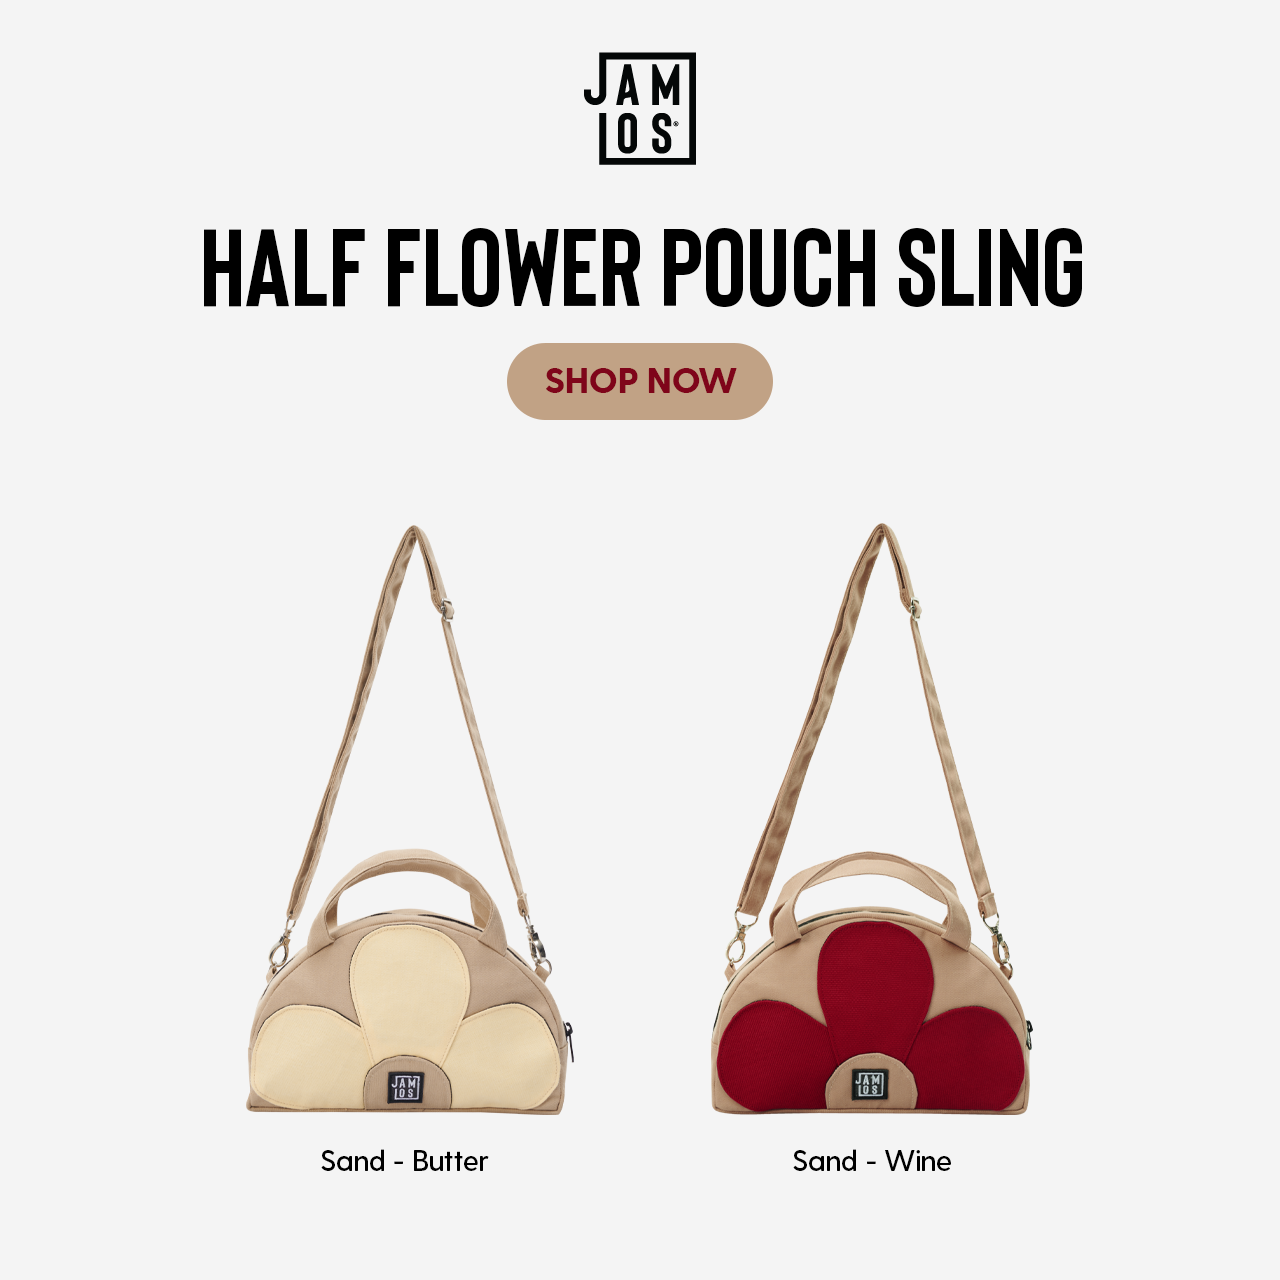 Half Flower Pouch Sling